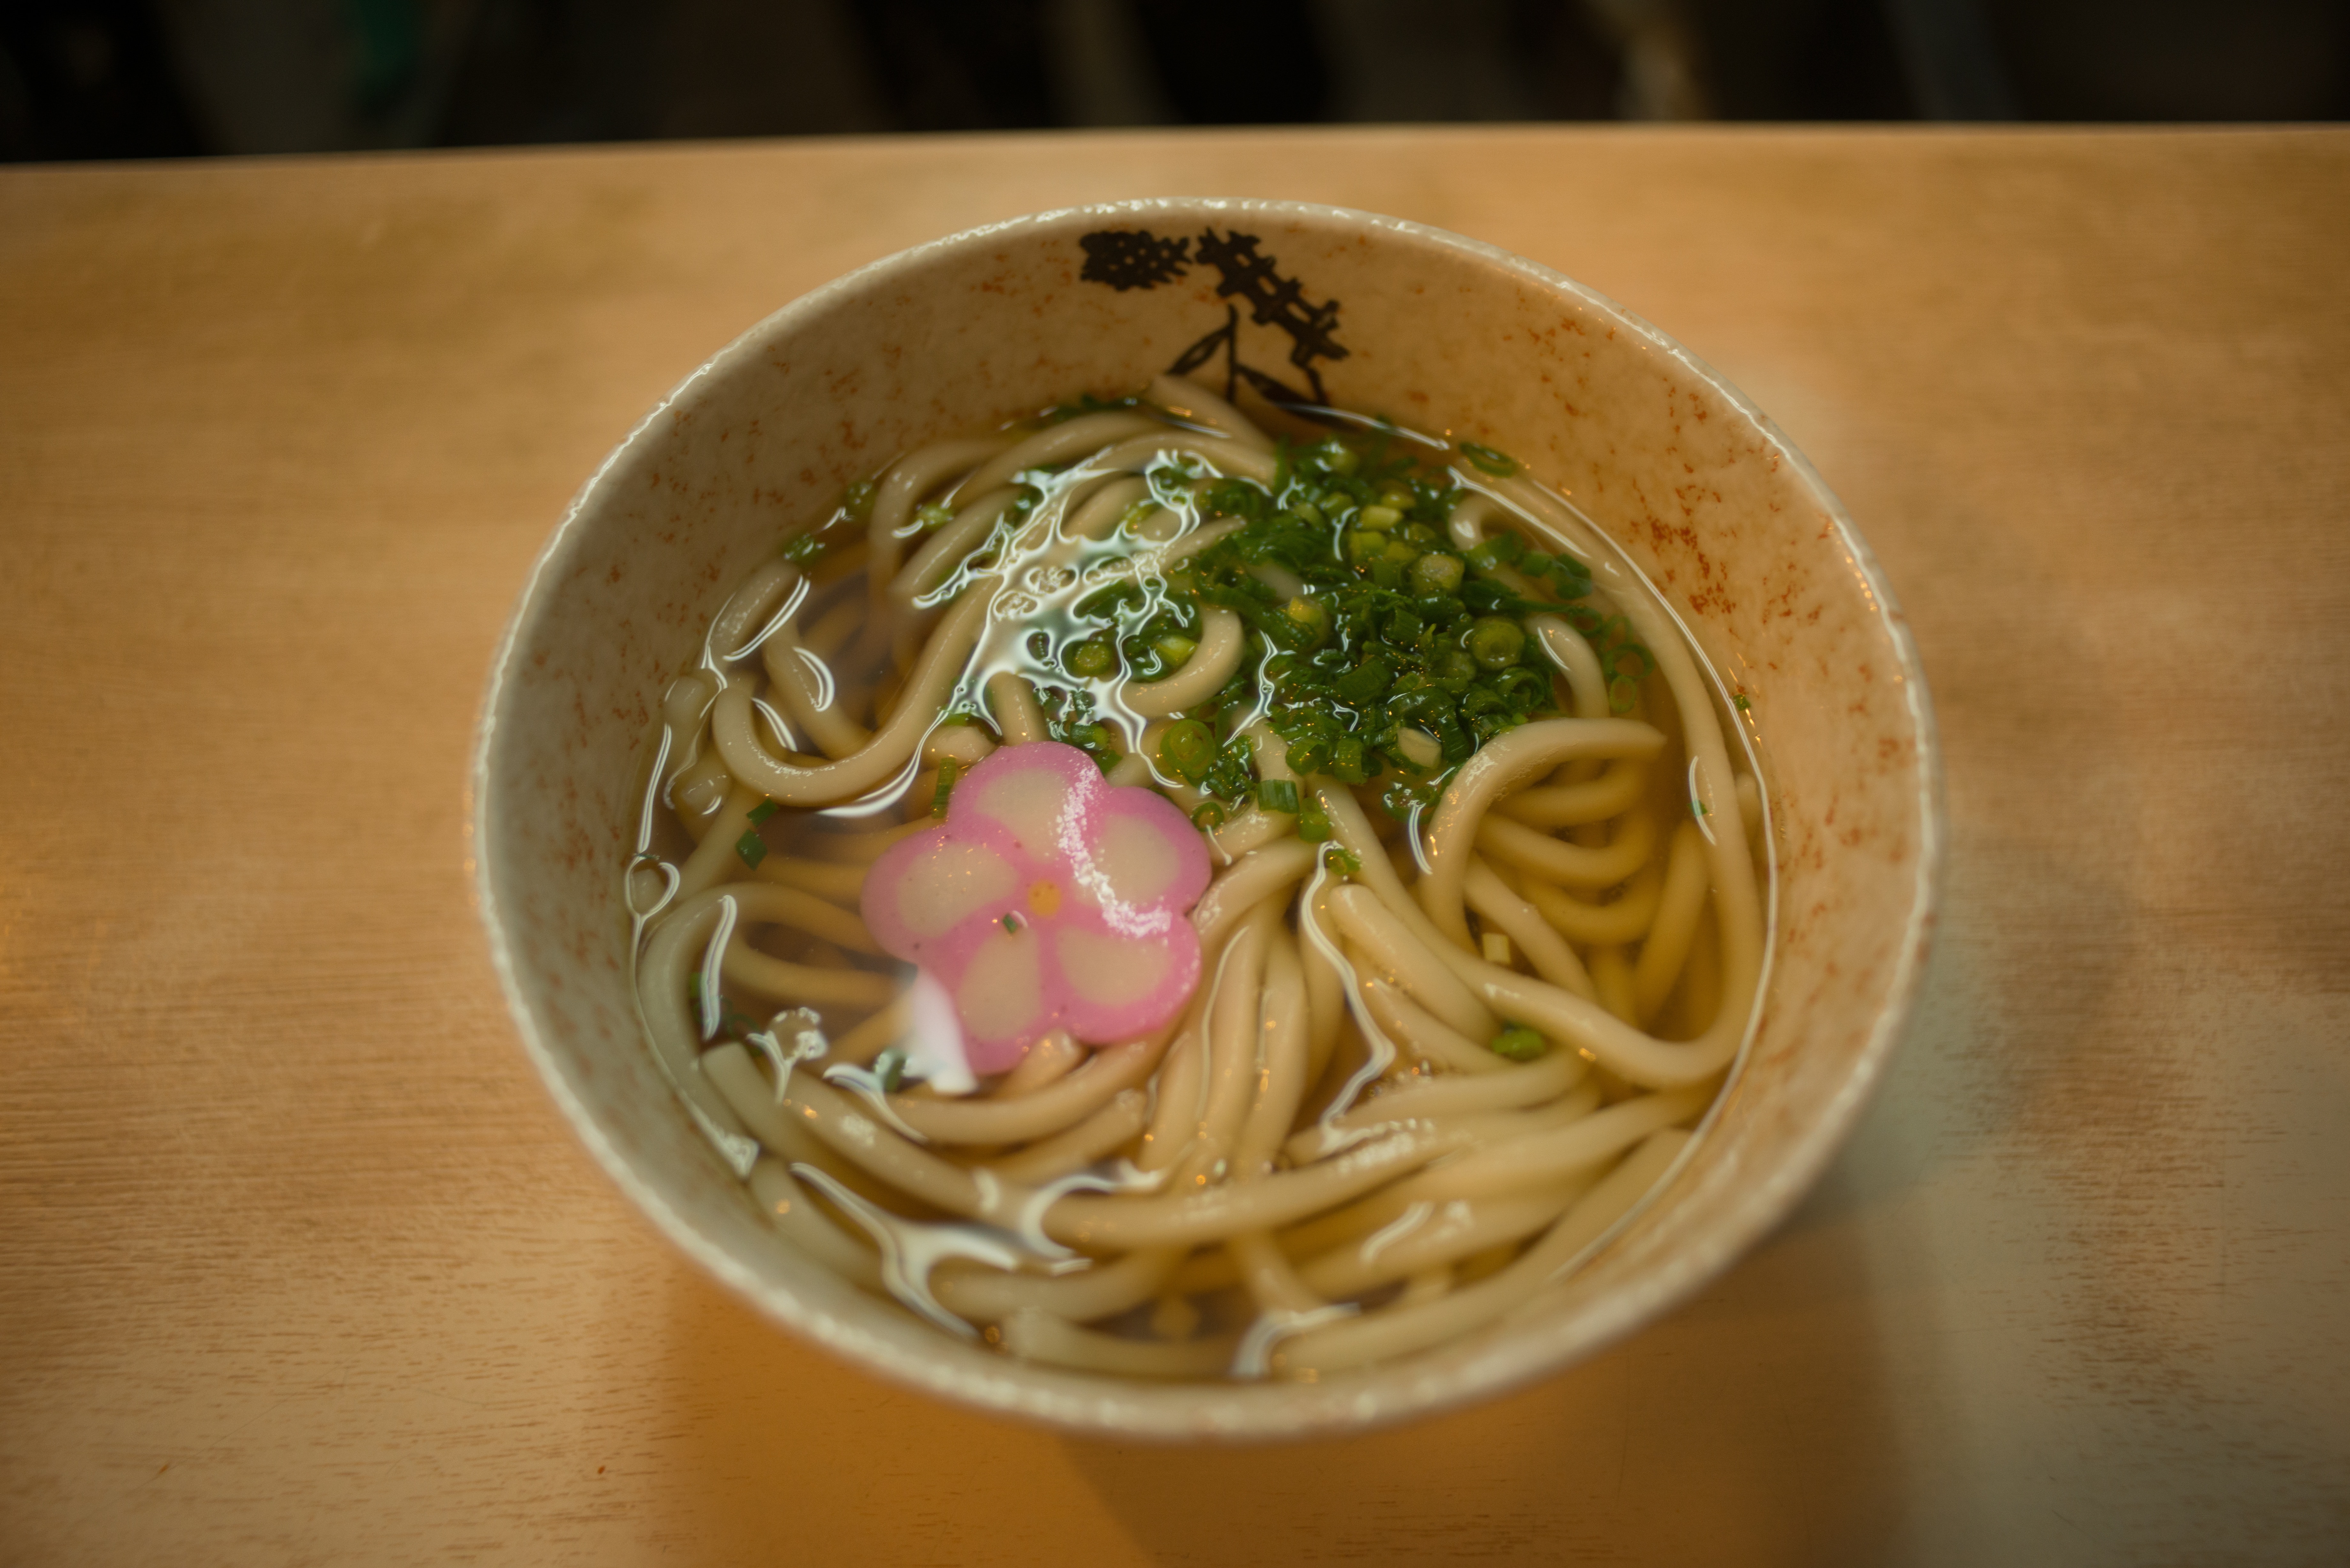 Kansai, Diet, Udon Noodles, Jr, food and drink, indoors